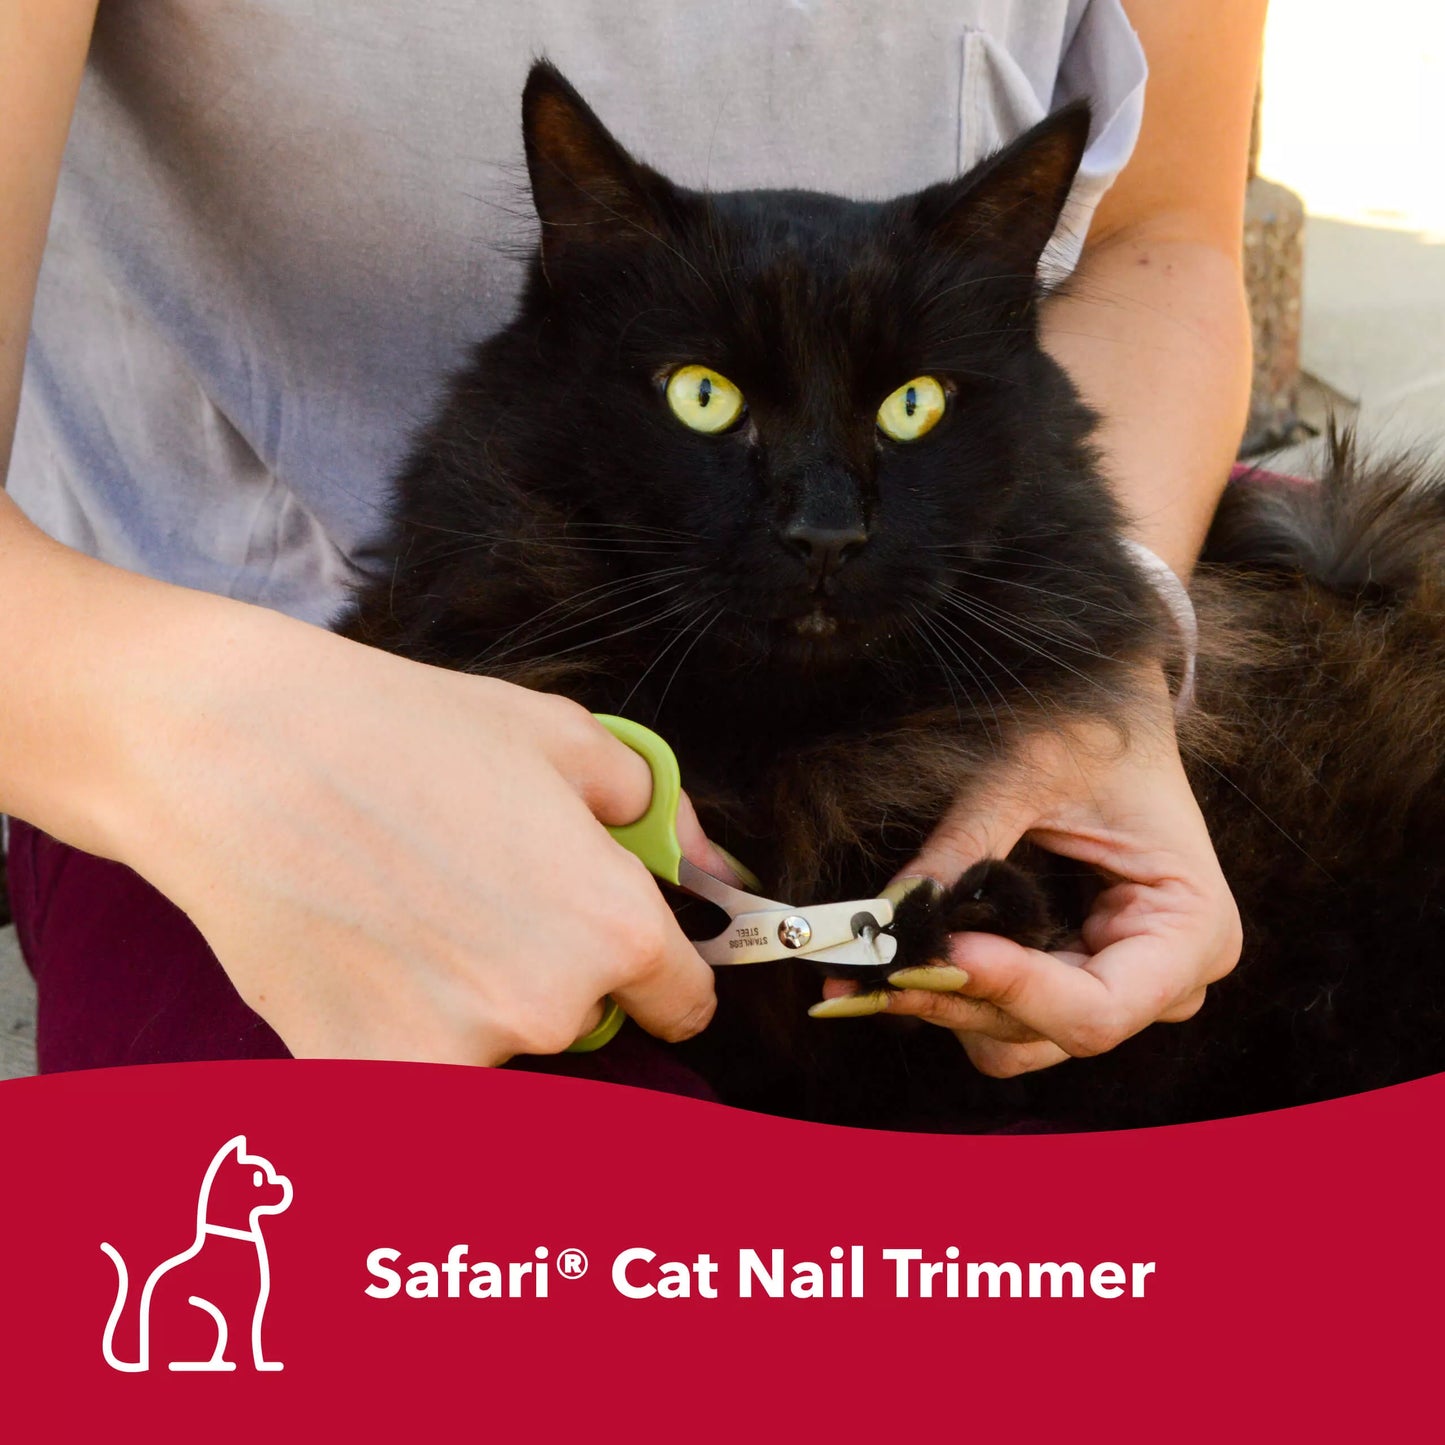 Safari Nail Trimmer For Cats